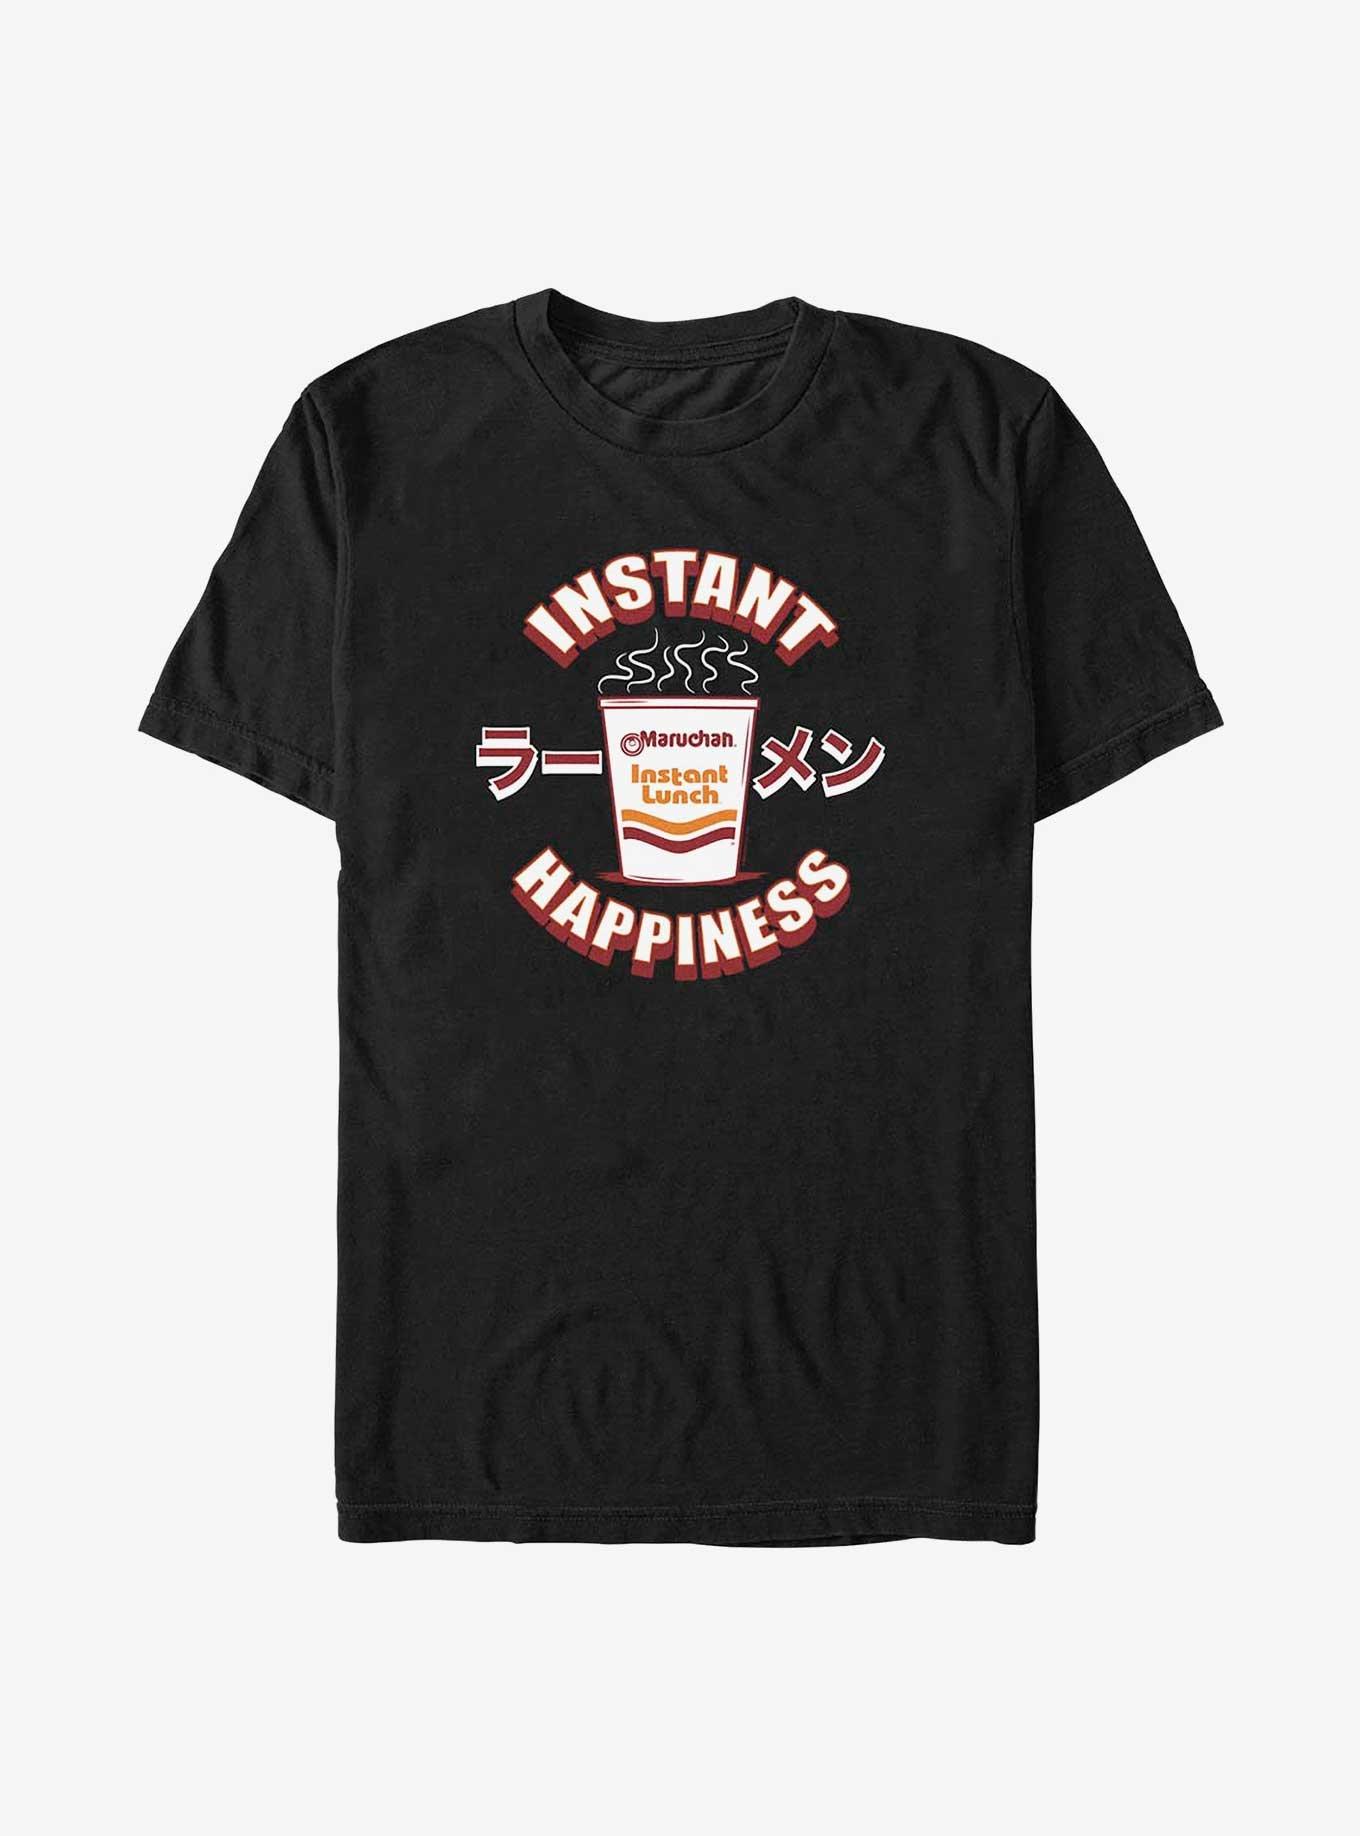 Maruchan Happiness T-Shirt